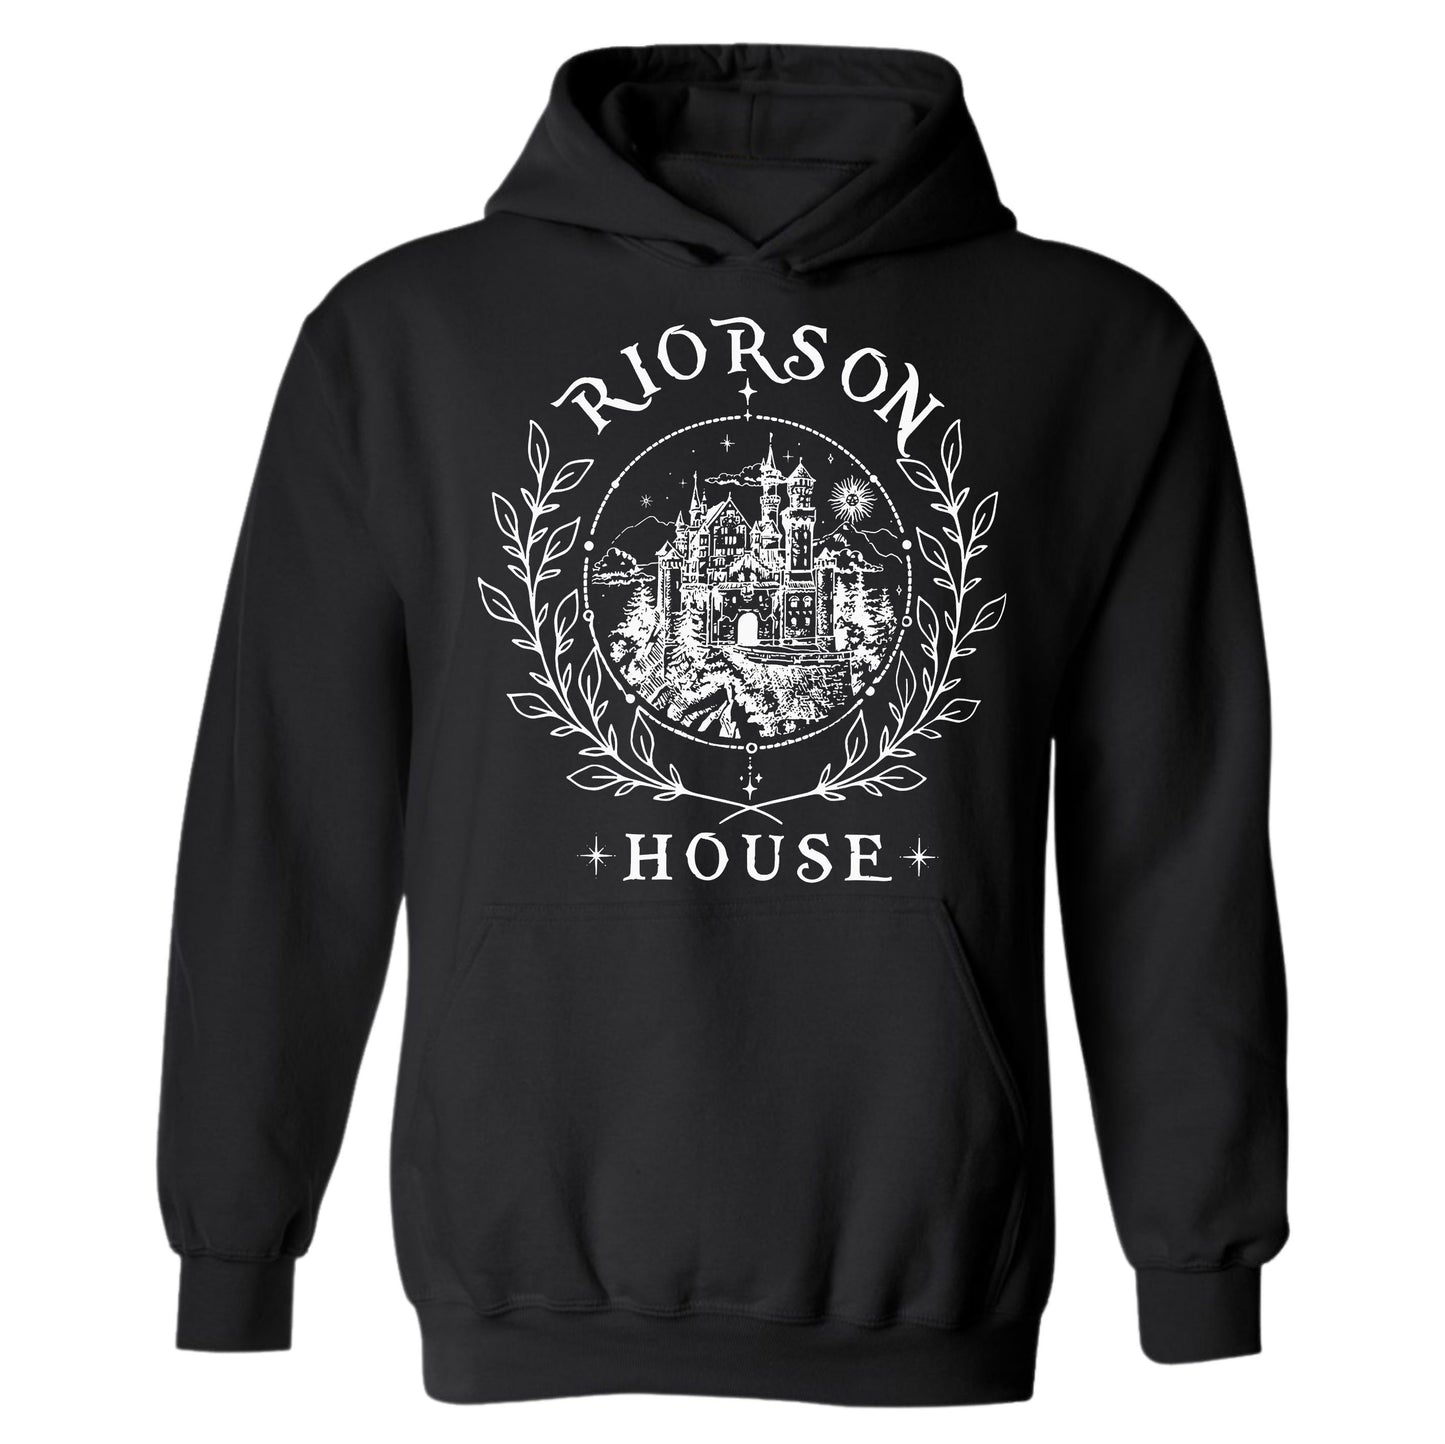 Gildan Adult Hoodie- Riorson House (Made To Order)